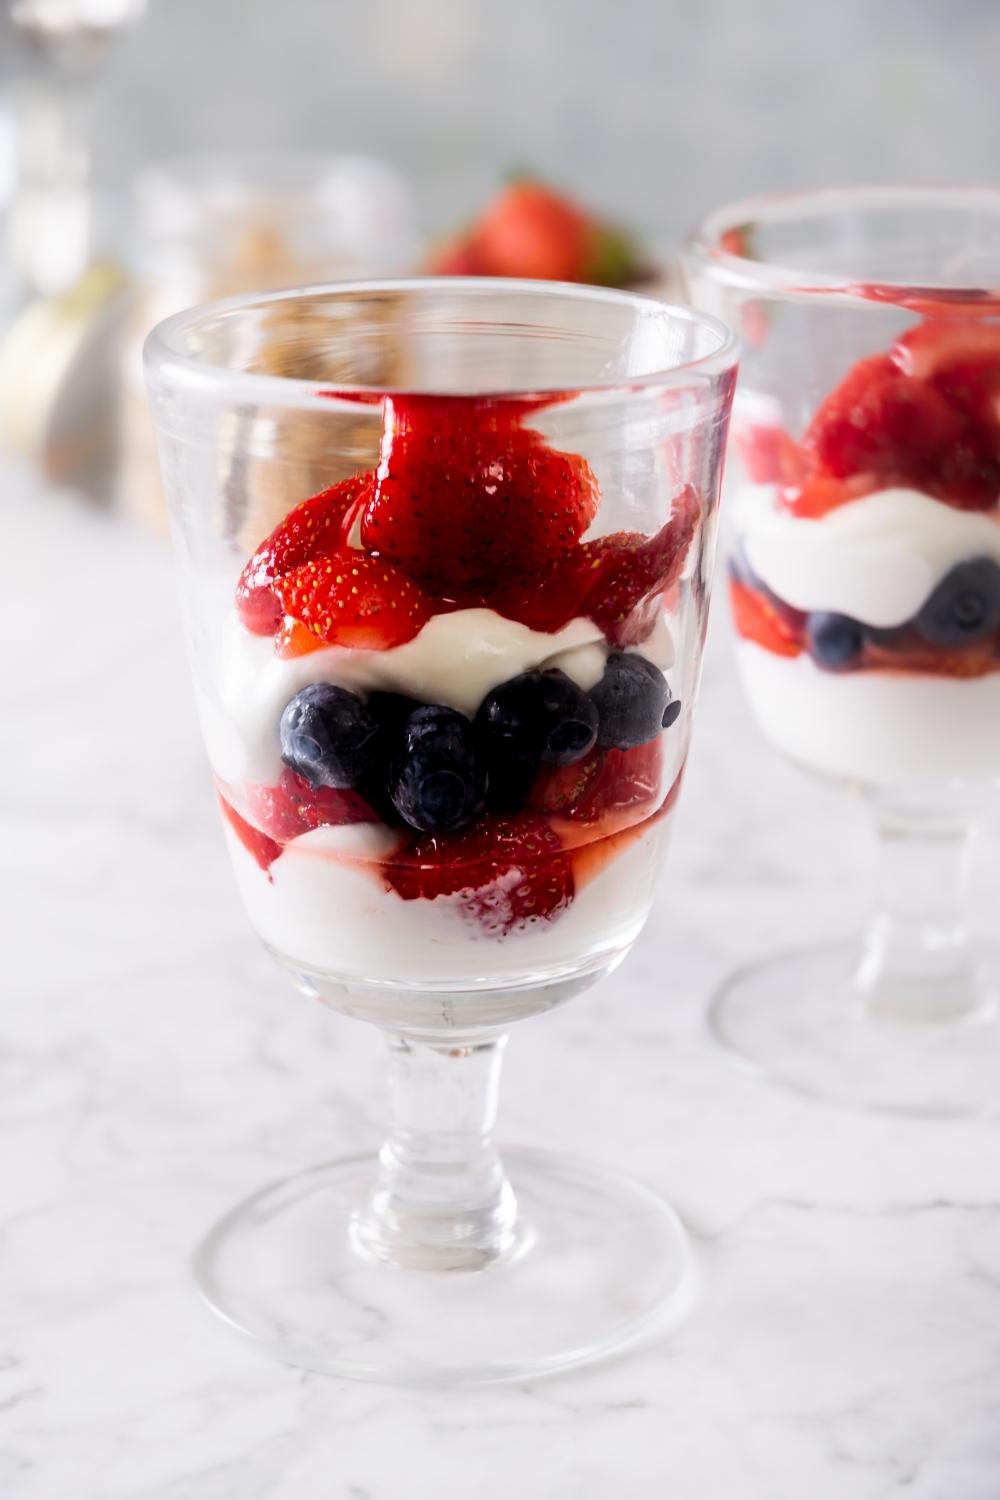 parfait glass layered with berries and yogurt